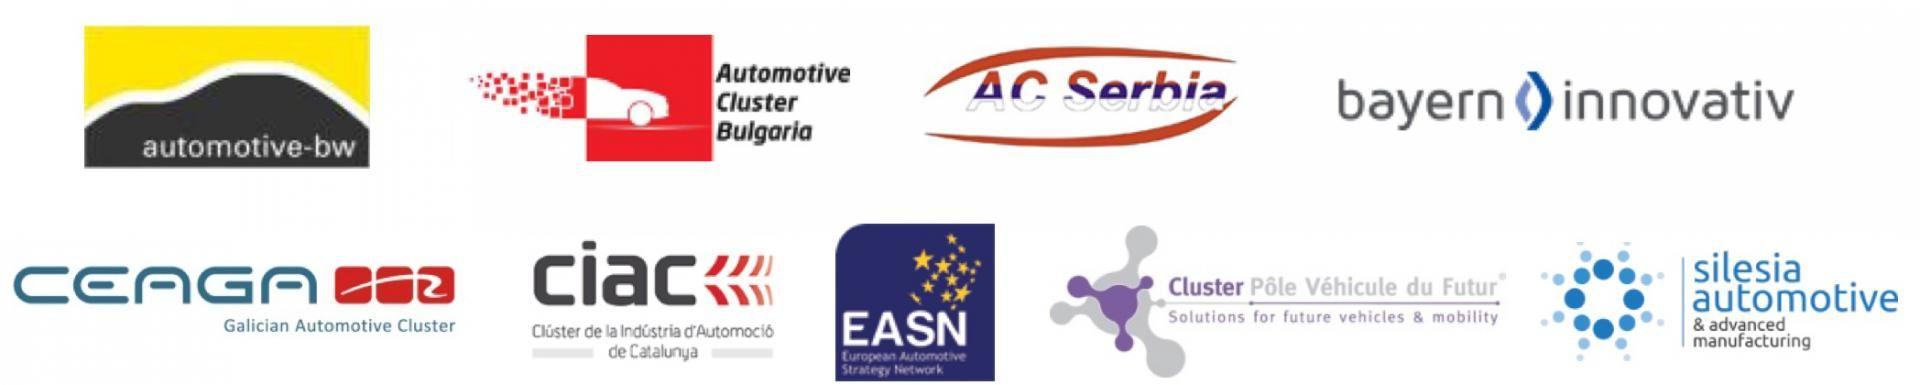 European Automotive Logo - European Automotive Cluster Network (EACN) - European Cluster ...